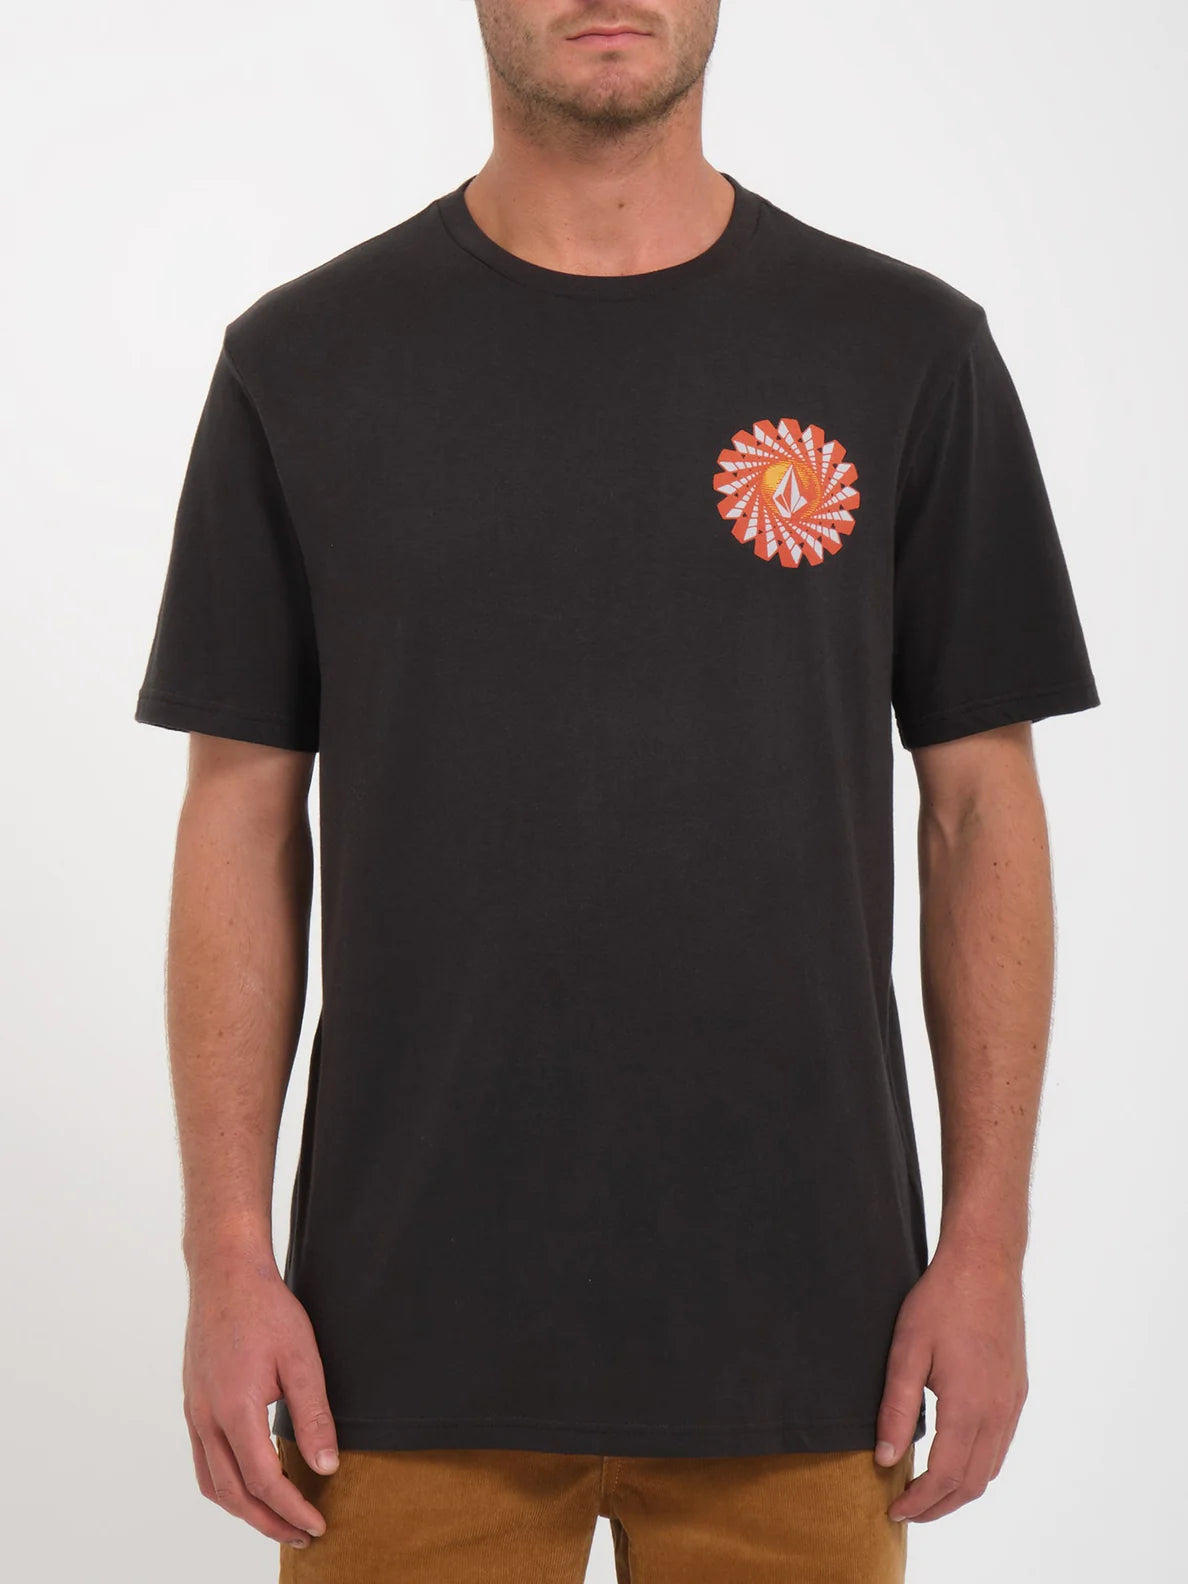 Camiseta Volcom Molchat Farm to Yarn - Stealth | Camisetas de hombre | Camisetas manga corta de hombre | Volcom Shop | surfdevils.com